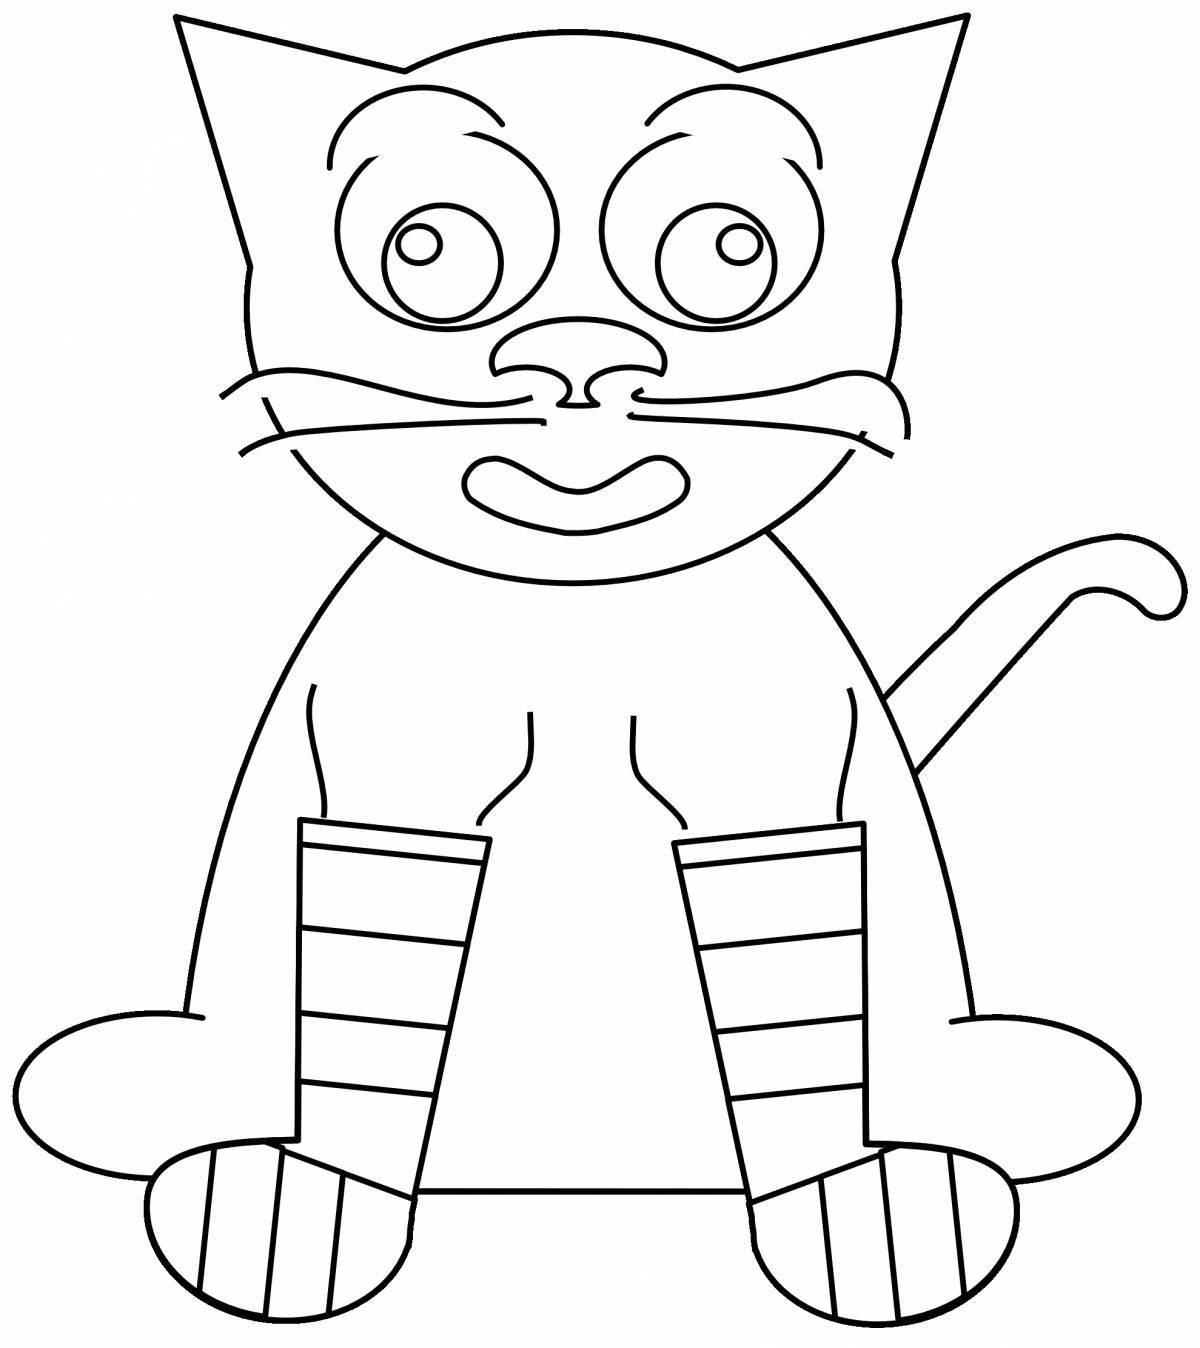 Забавная раскраска cartooncat